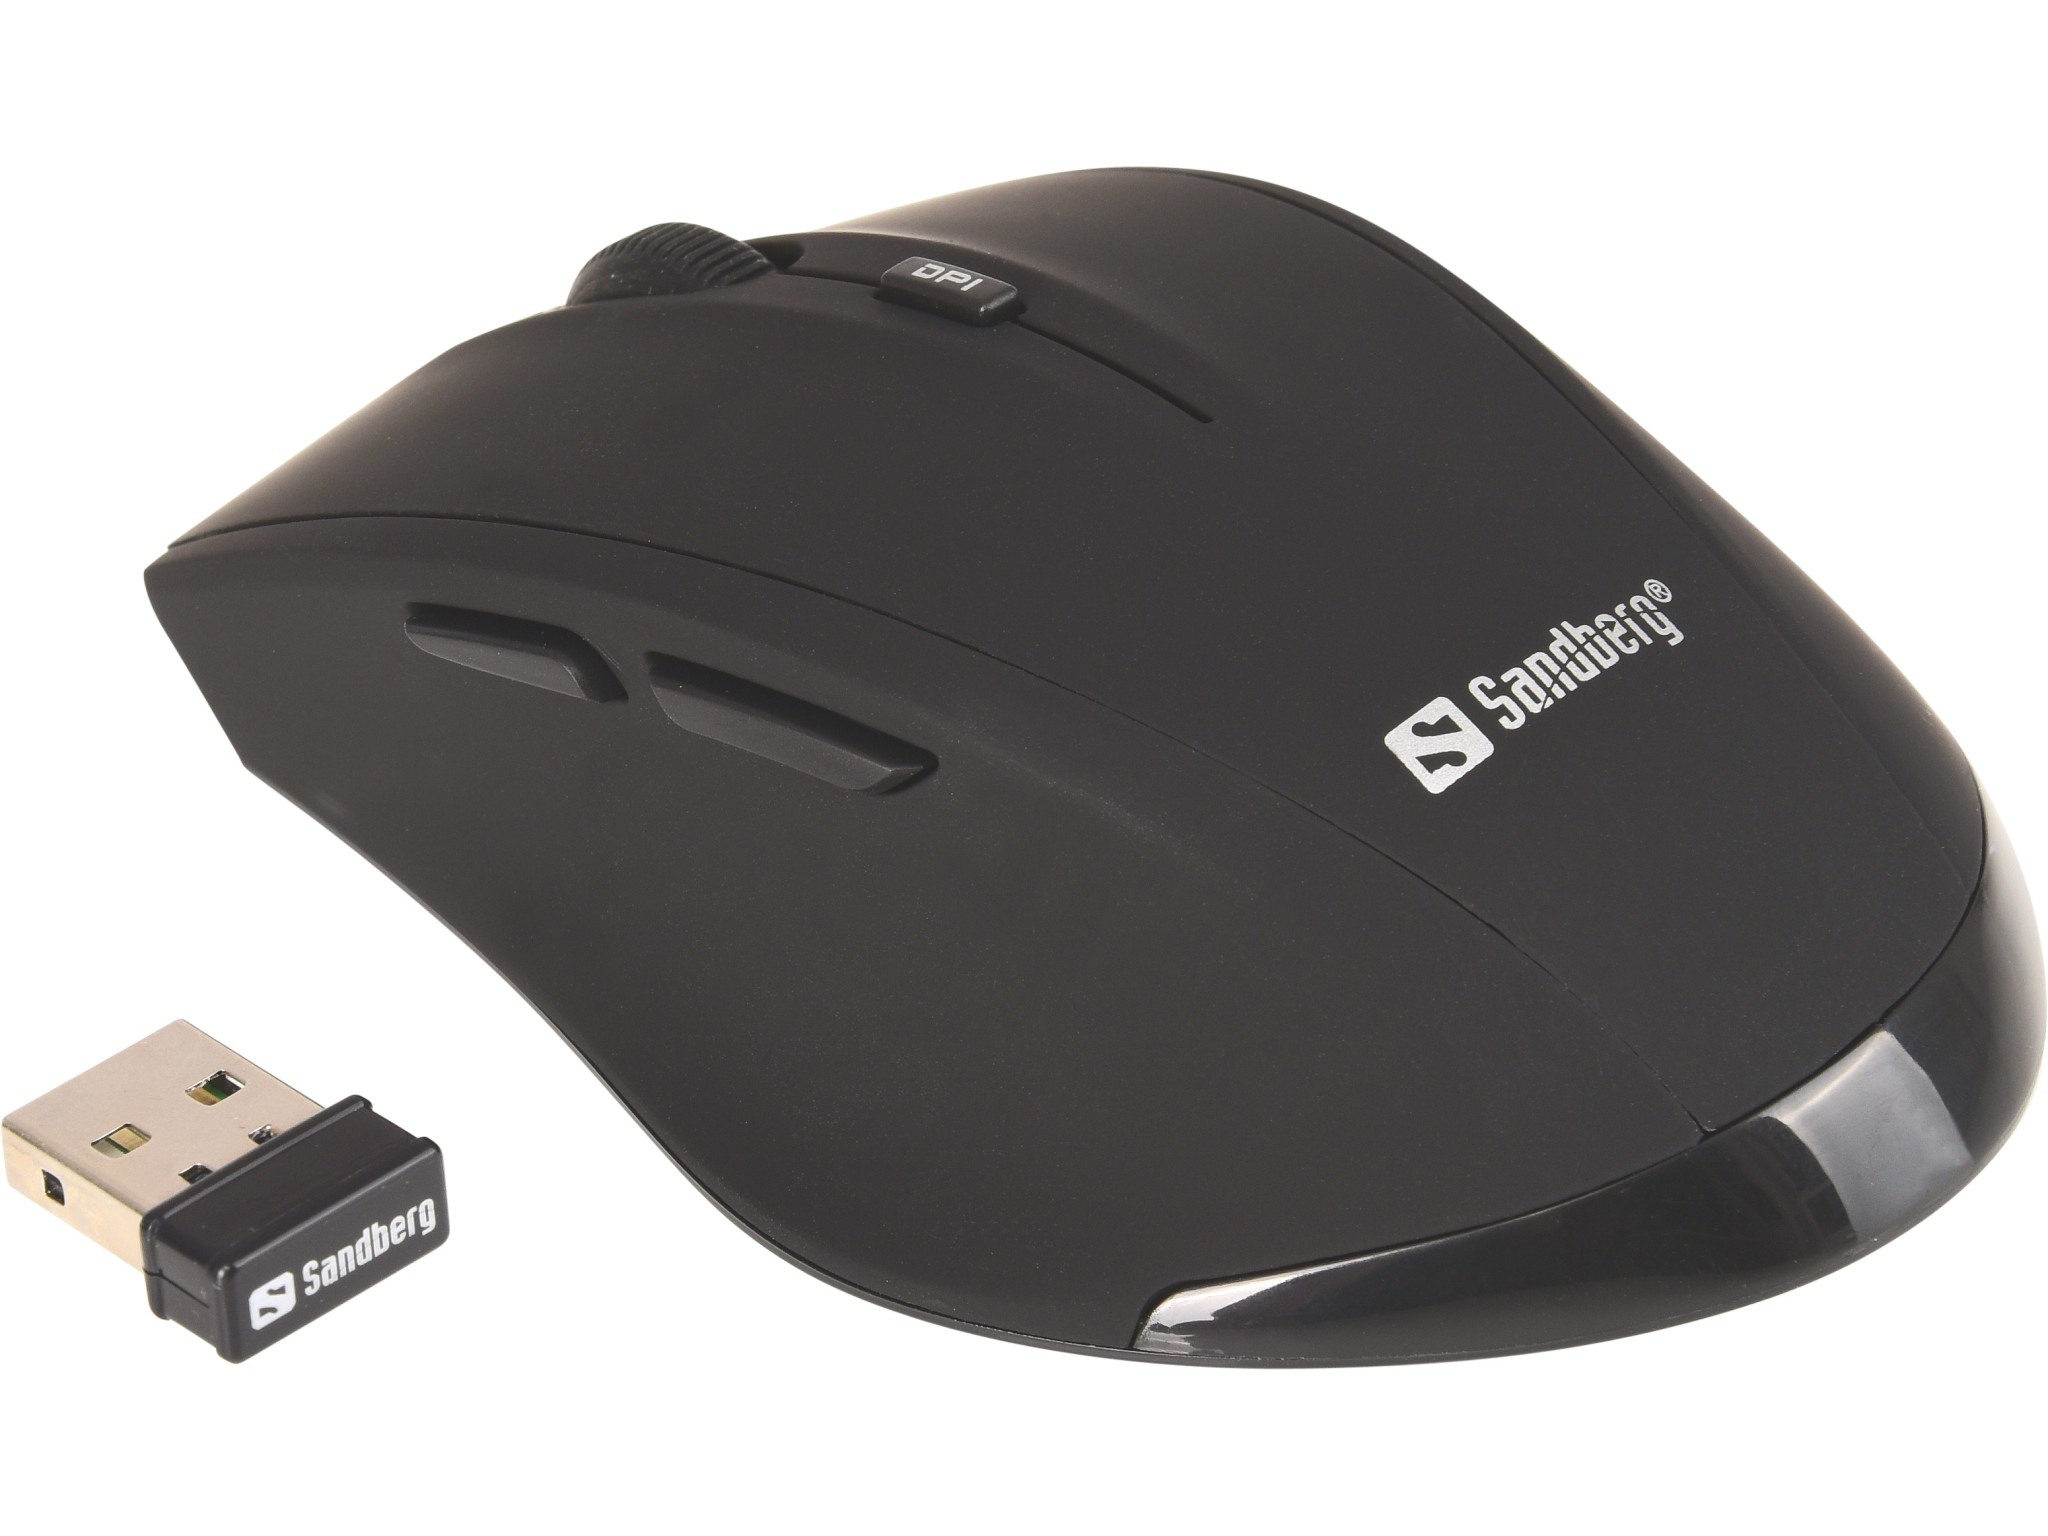 mouse wireless sandberg 630-06 pro, 1600dpi, usb, negru